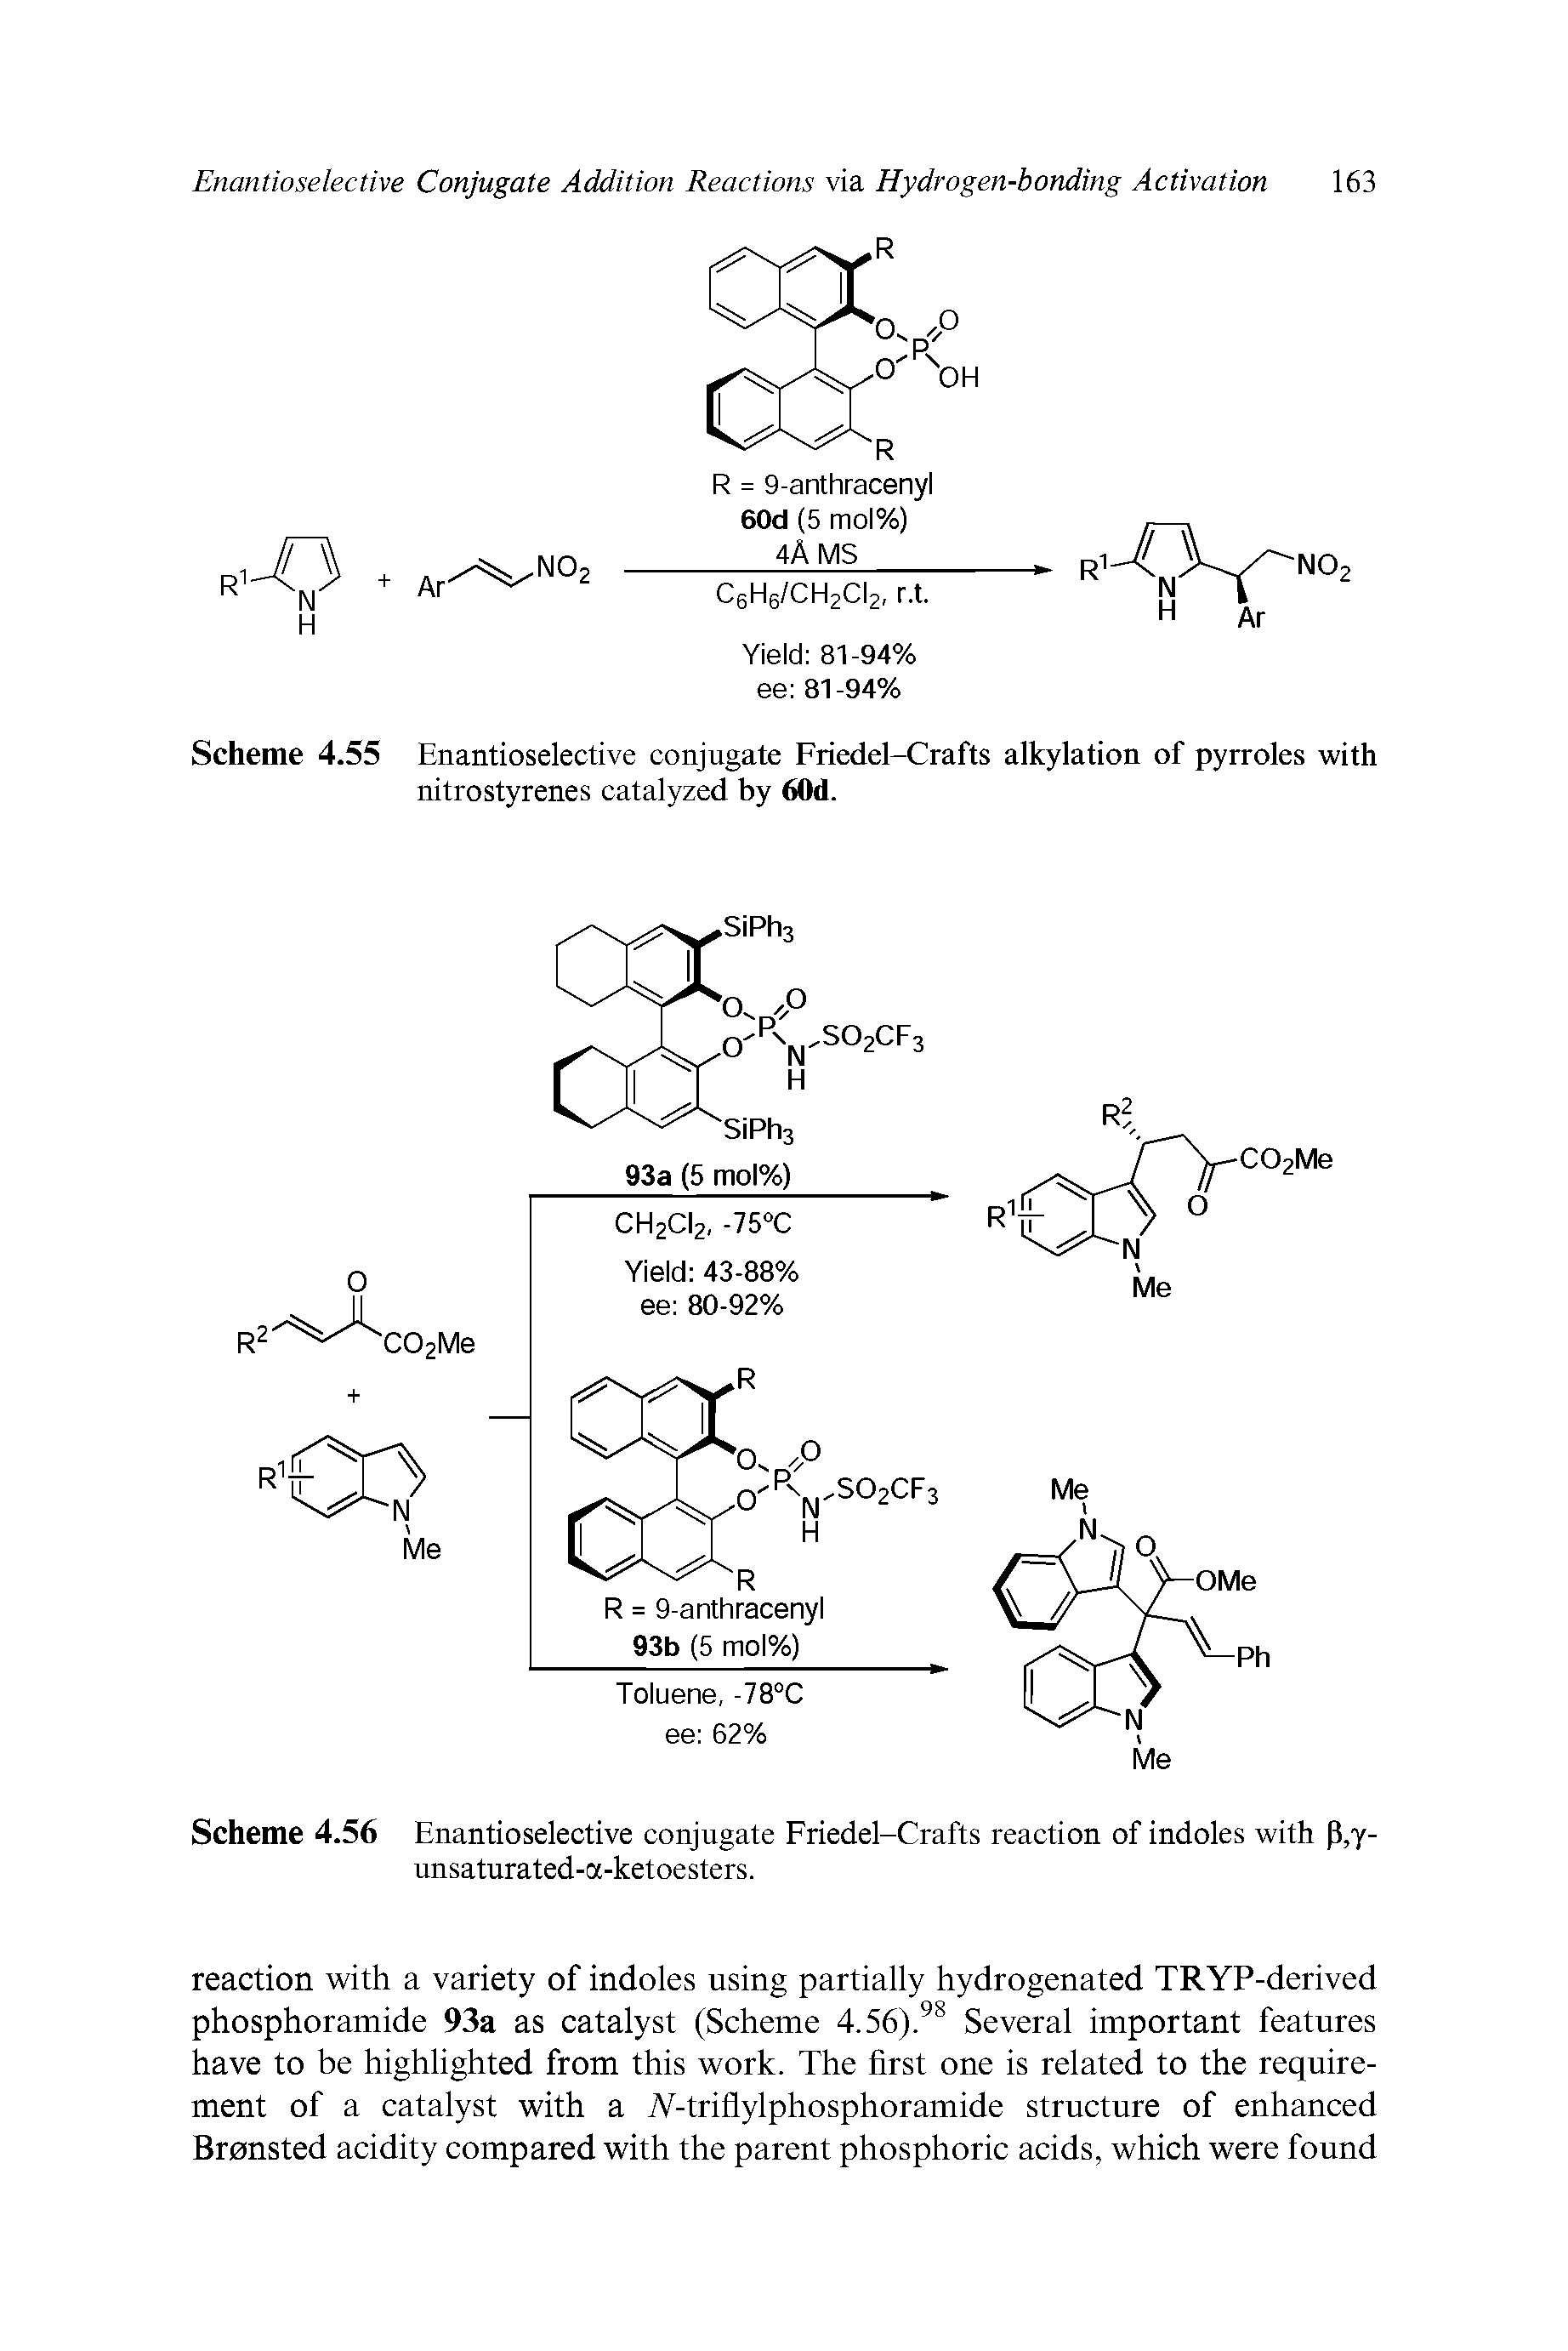 Scheme 4.55 Enantioselective conjugate Friedel-Crafts alkylation of pyrroles with nitrostyrenes catalyzed by 60d.